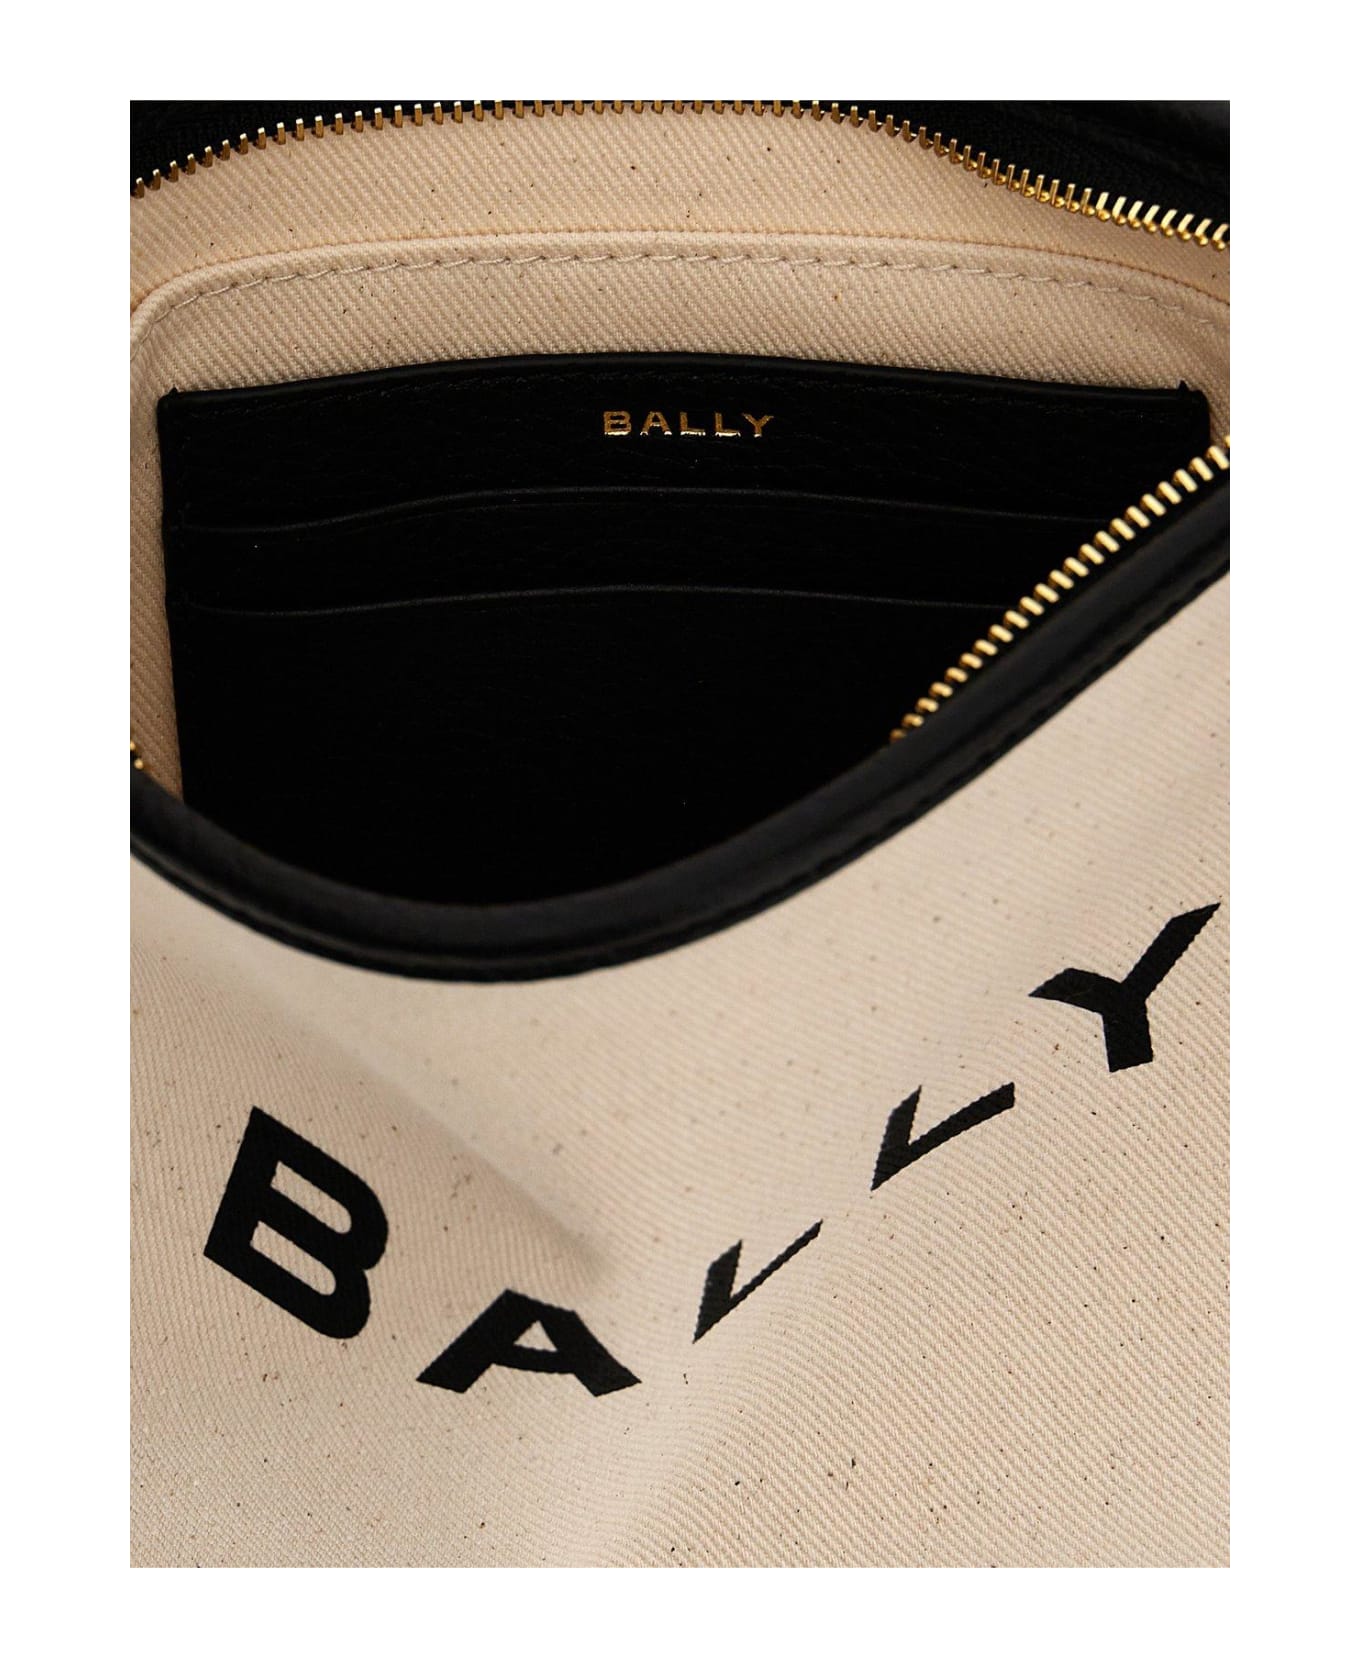 Bally Logo Printed Zipped Clutch Bag - NEUTRALS